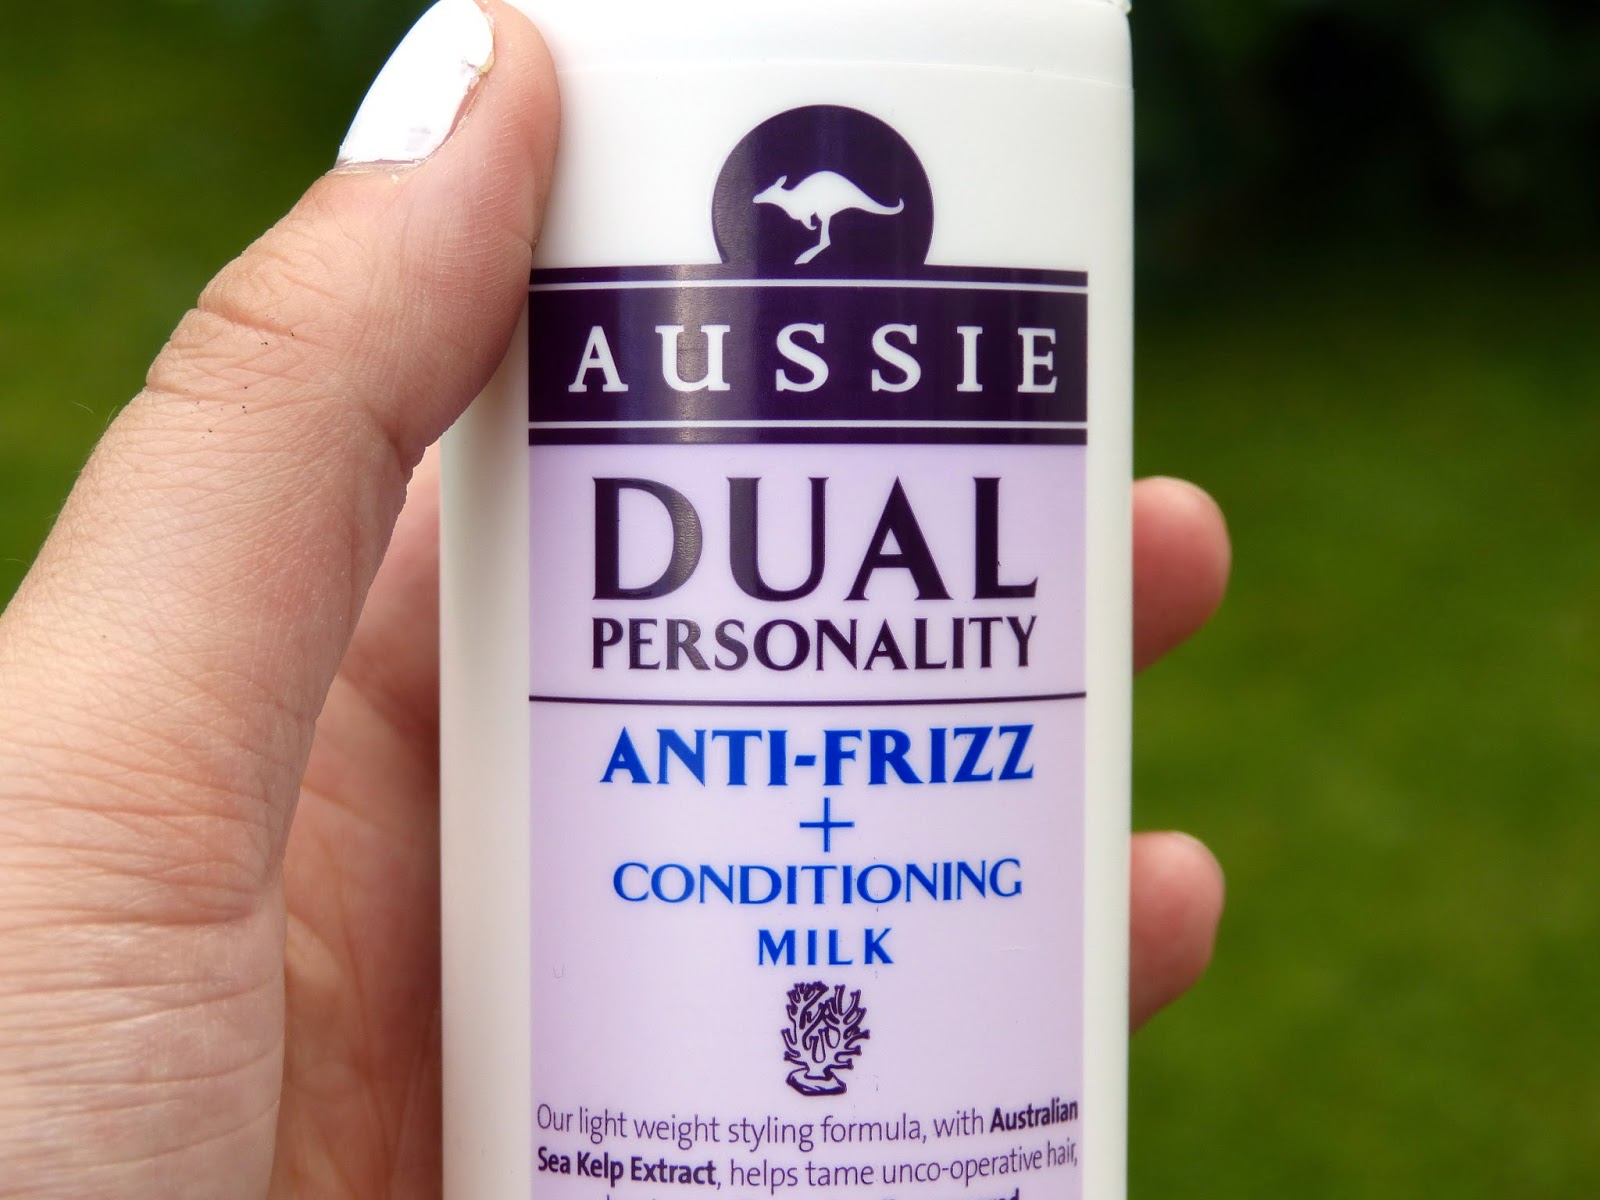 Aussie Dual Personality anti-frizz & conditioning milk